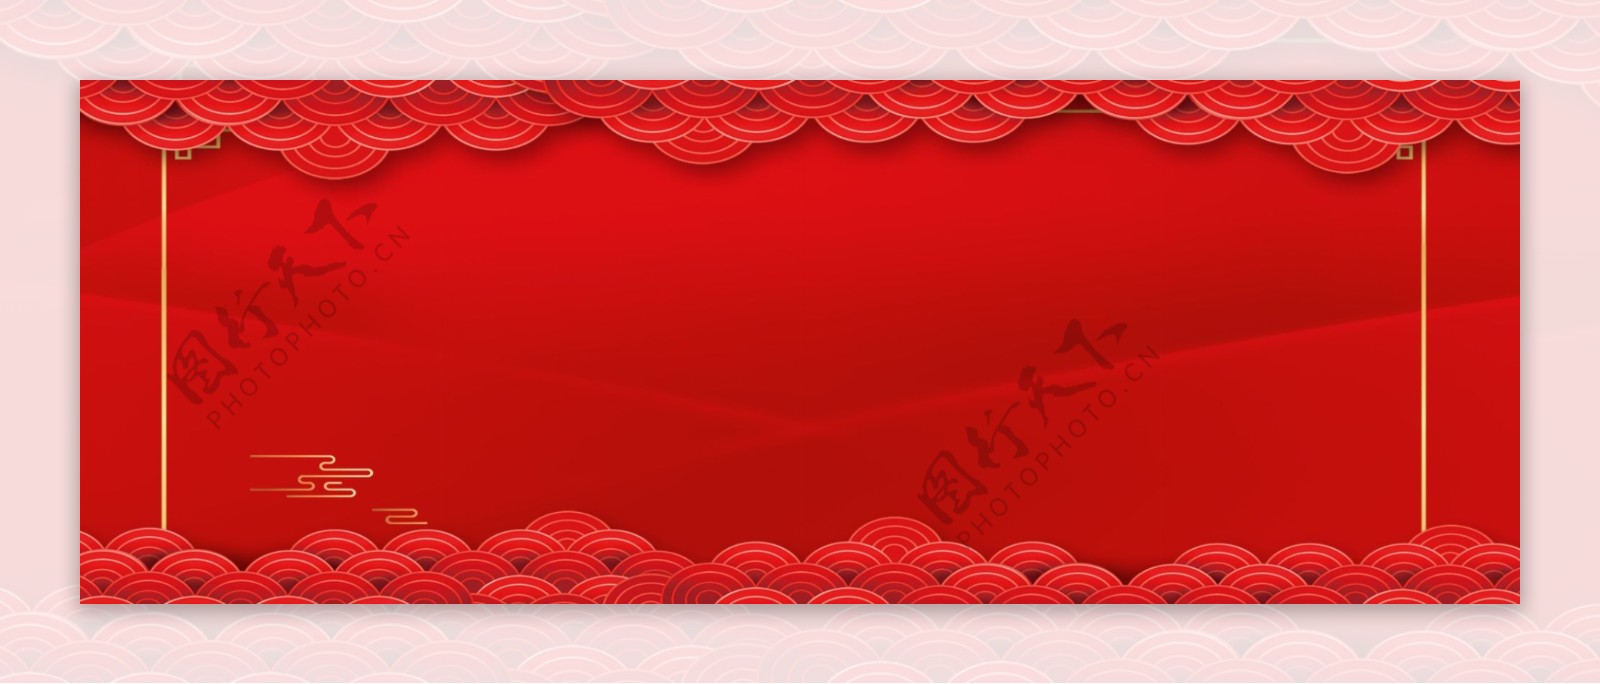 喜庆中国风红色装饰banner背景